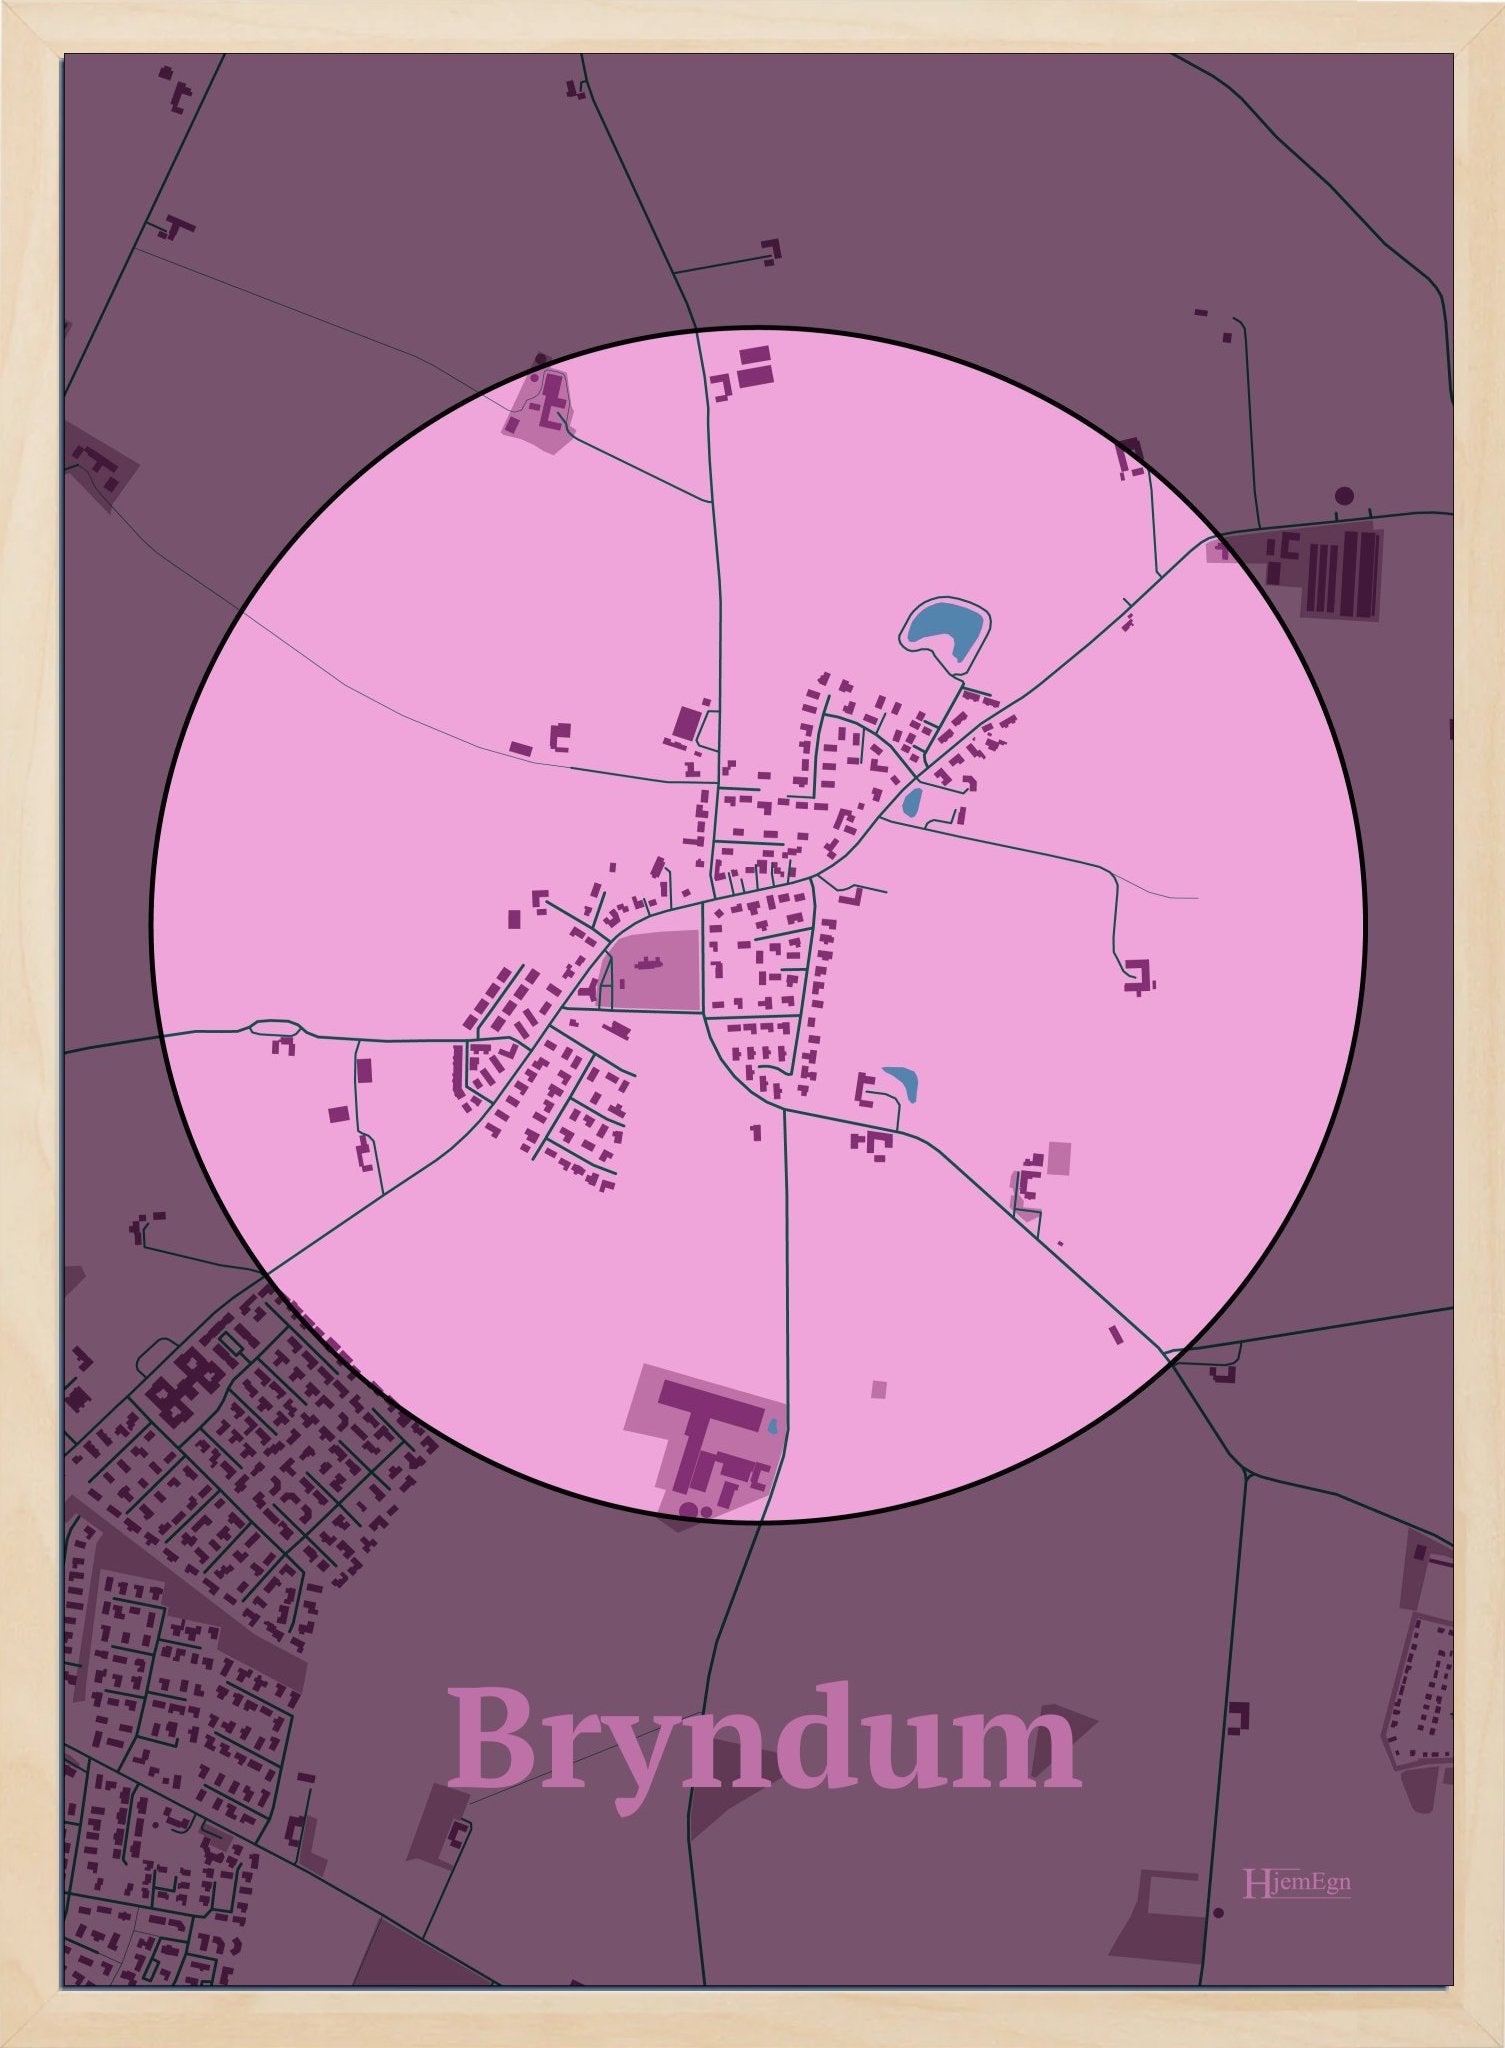 Bryndum plakat i farve pastel rød og HjemEgn.dk design centrum. Design bykort for Bryndum